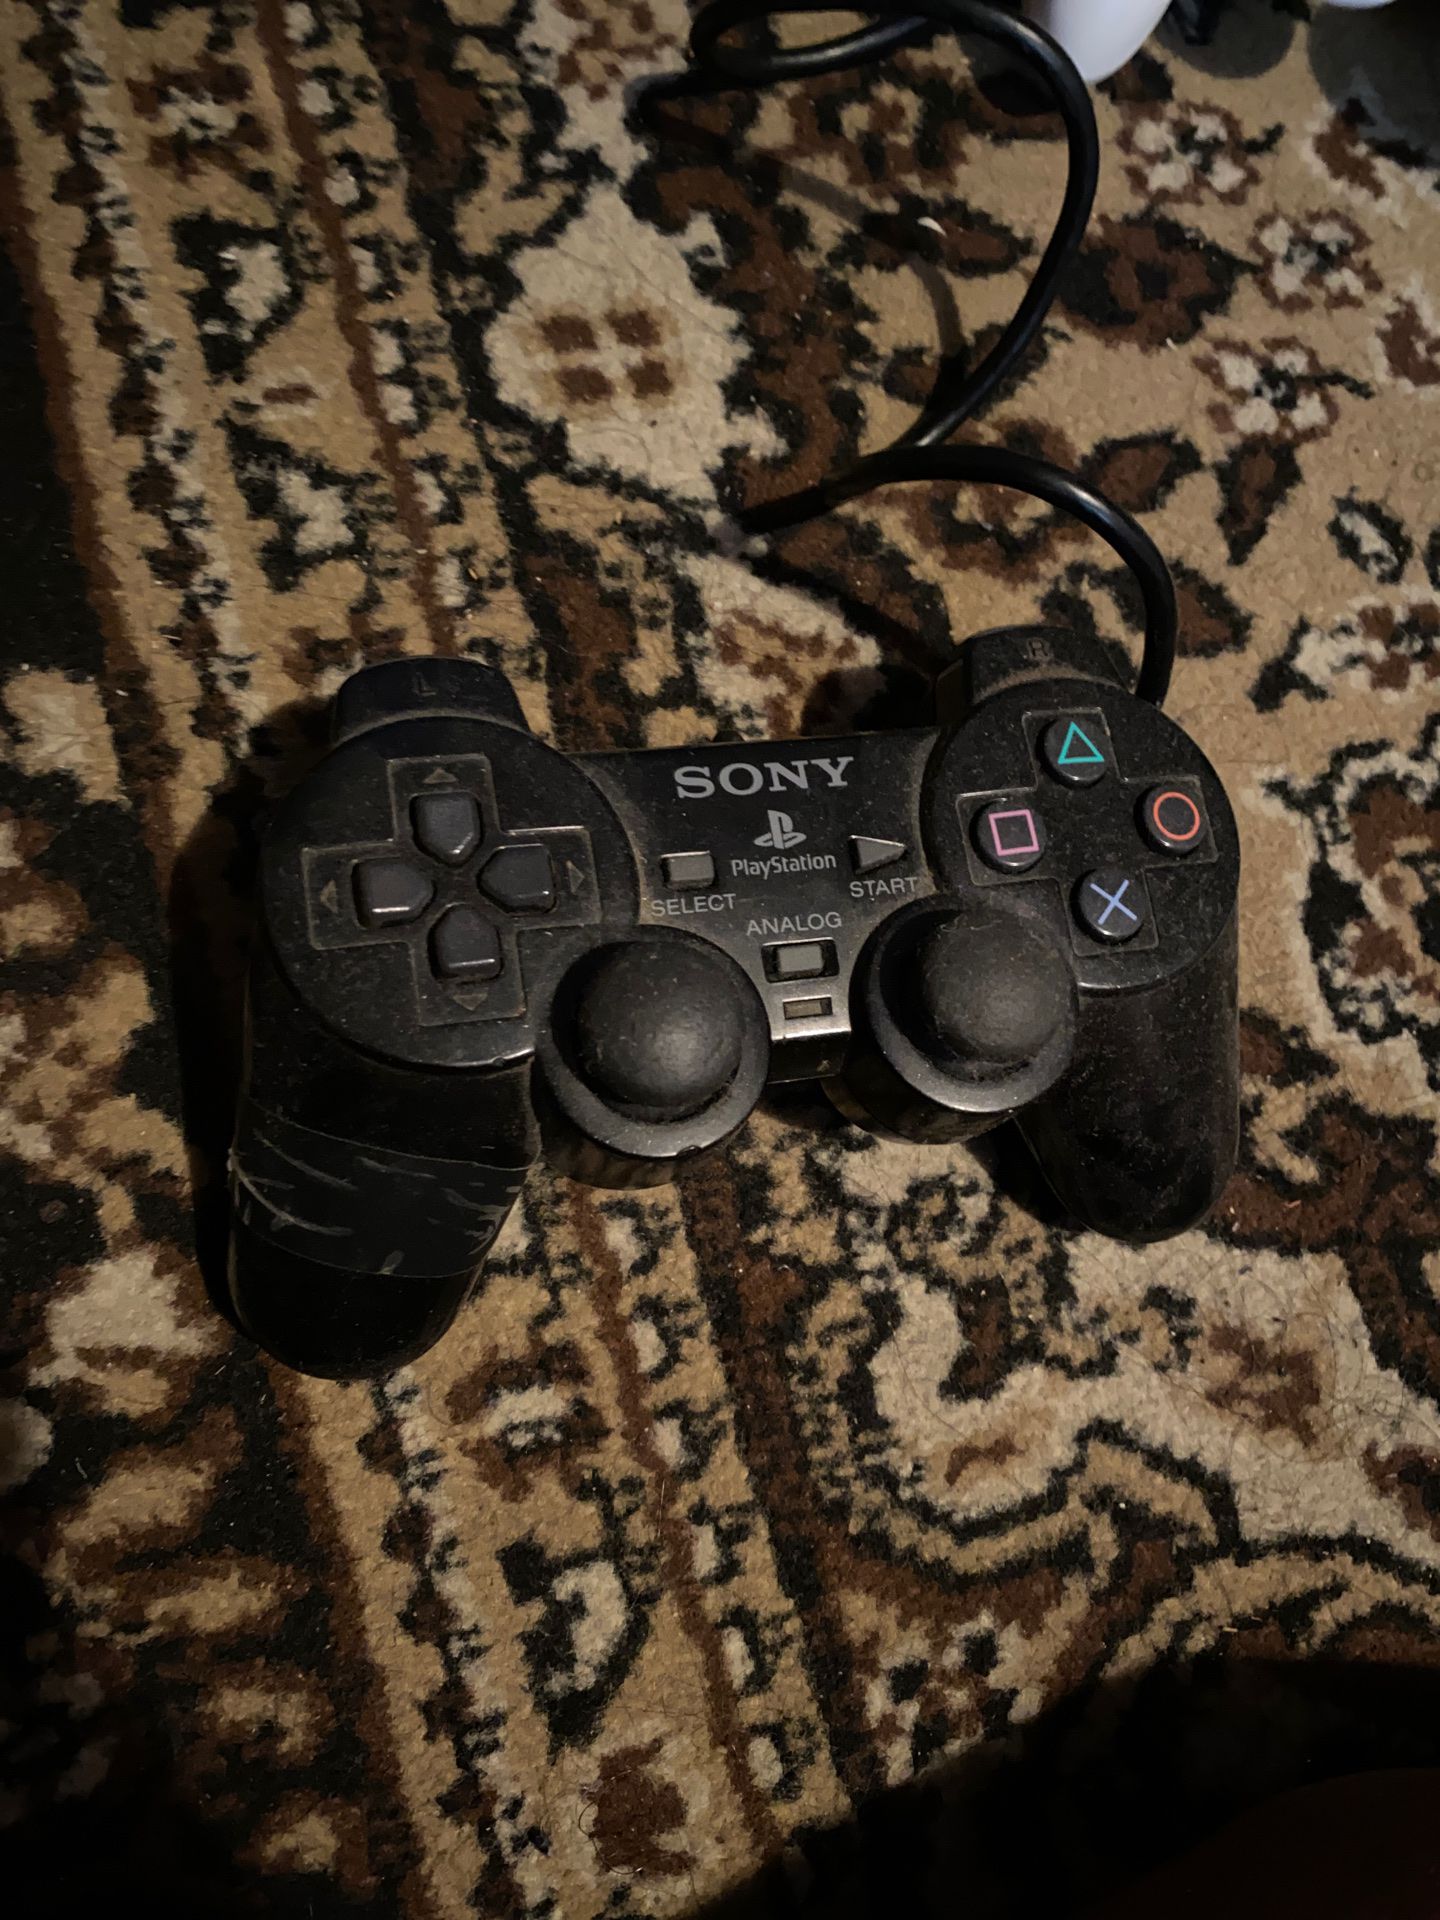 PS2 controller broken